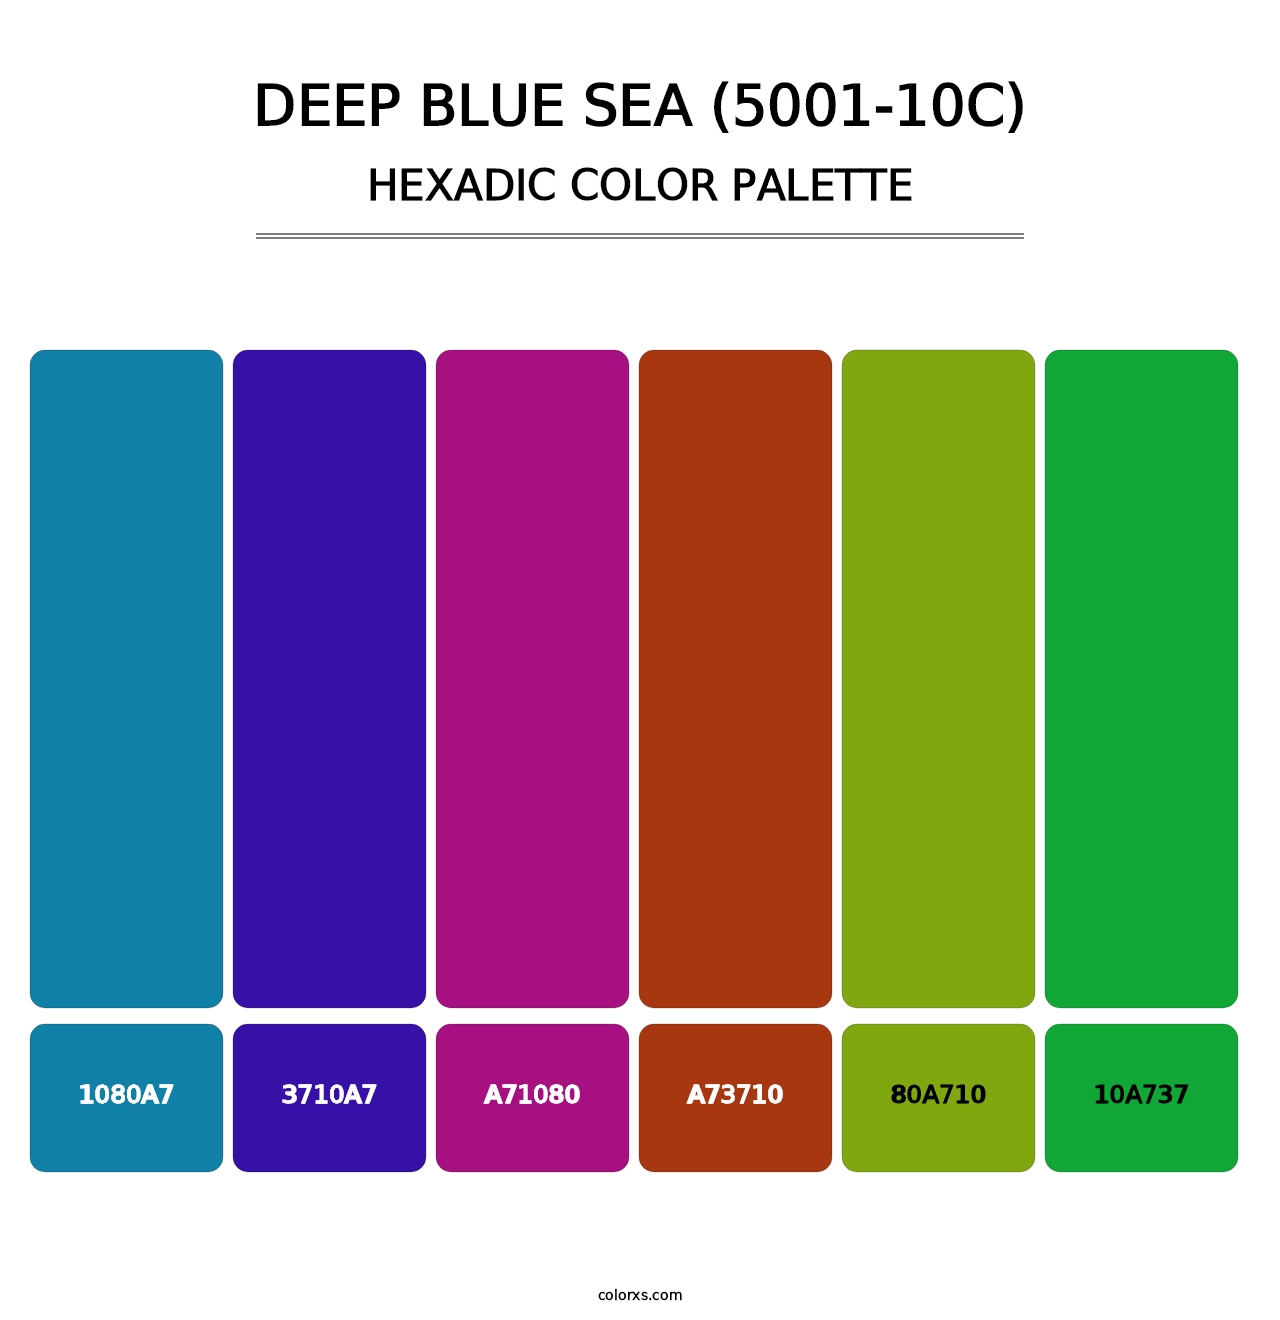 Deep Blue Sea (5001-10C) - Hexadic Color Palette